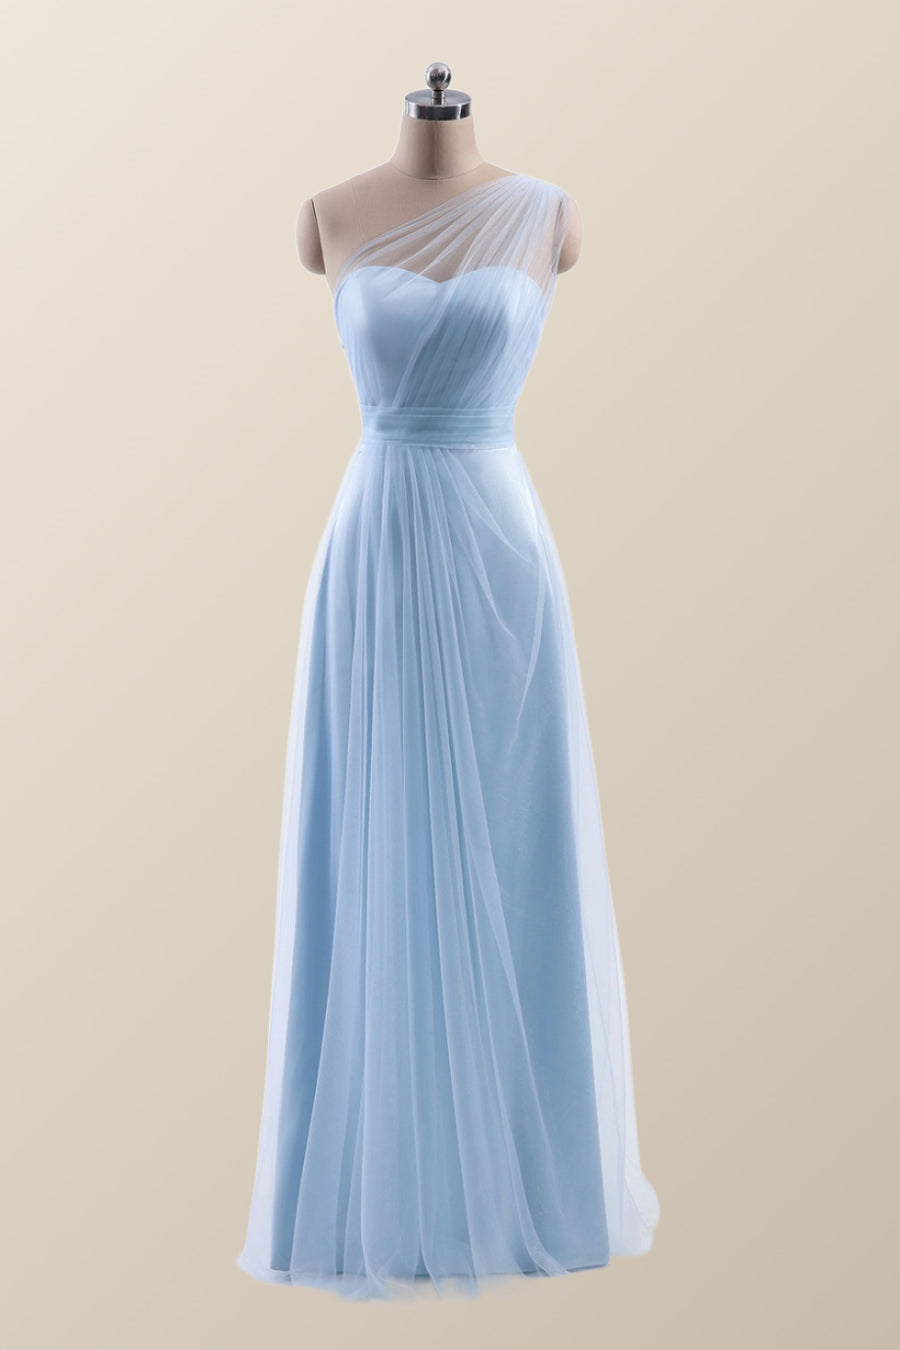 One Shoulder Light Blue Tulle A-line Bridesmaid Dress